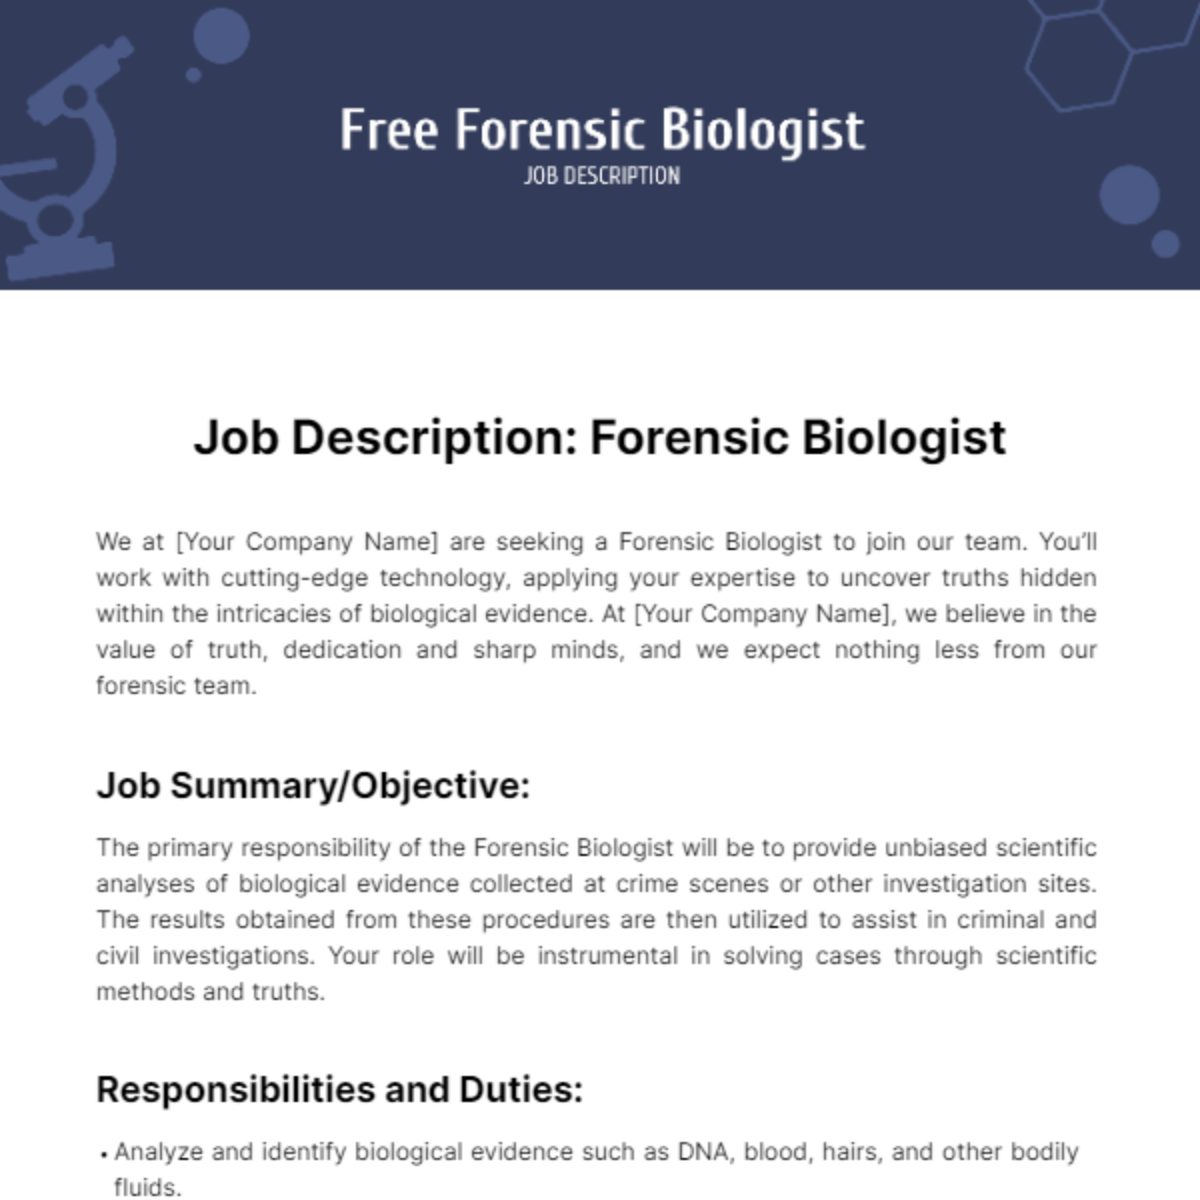 Free Forensic Biologist Job Description Template